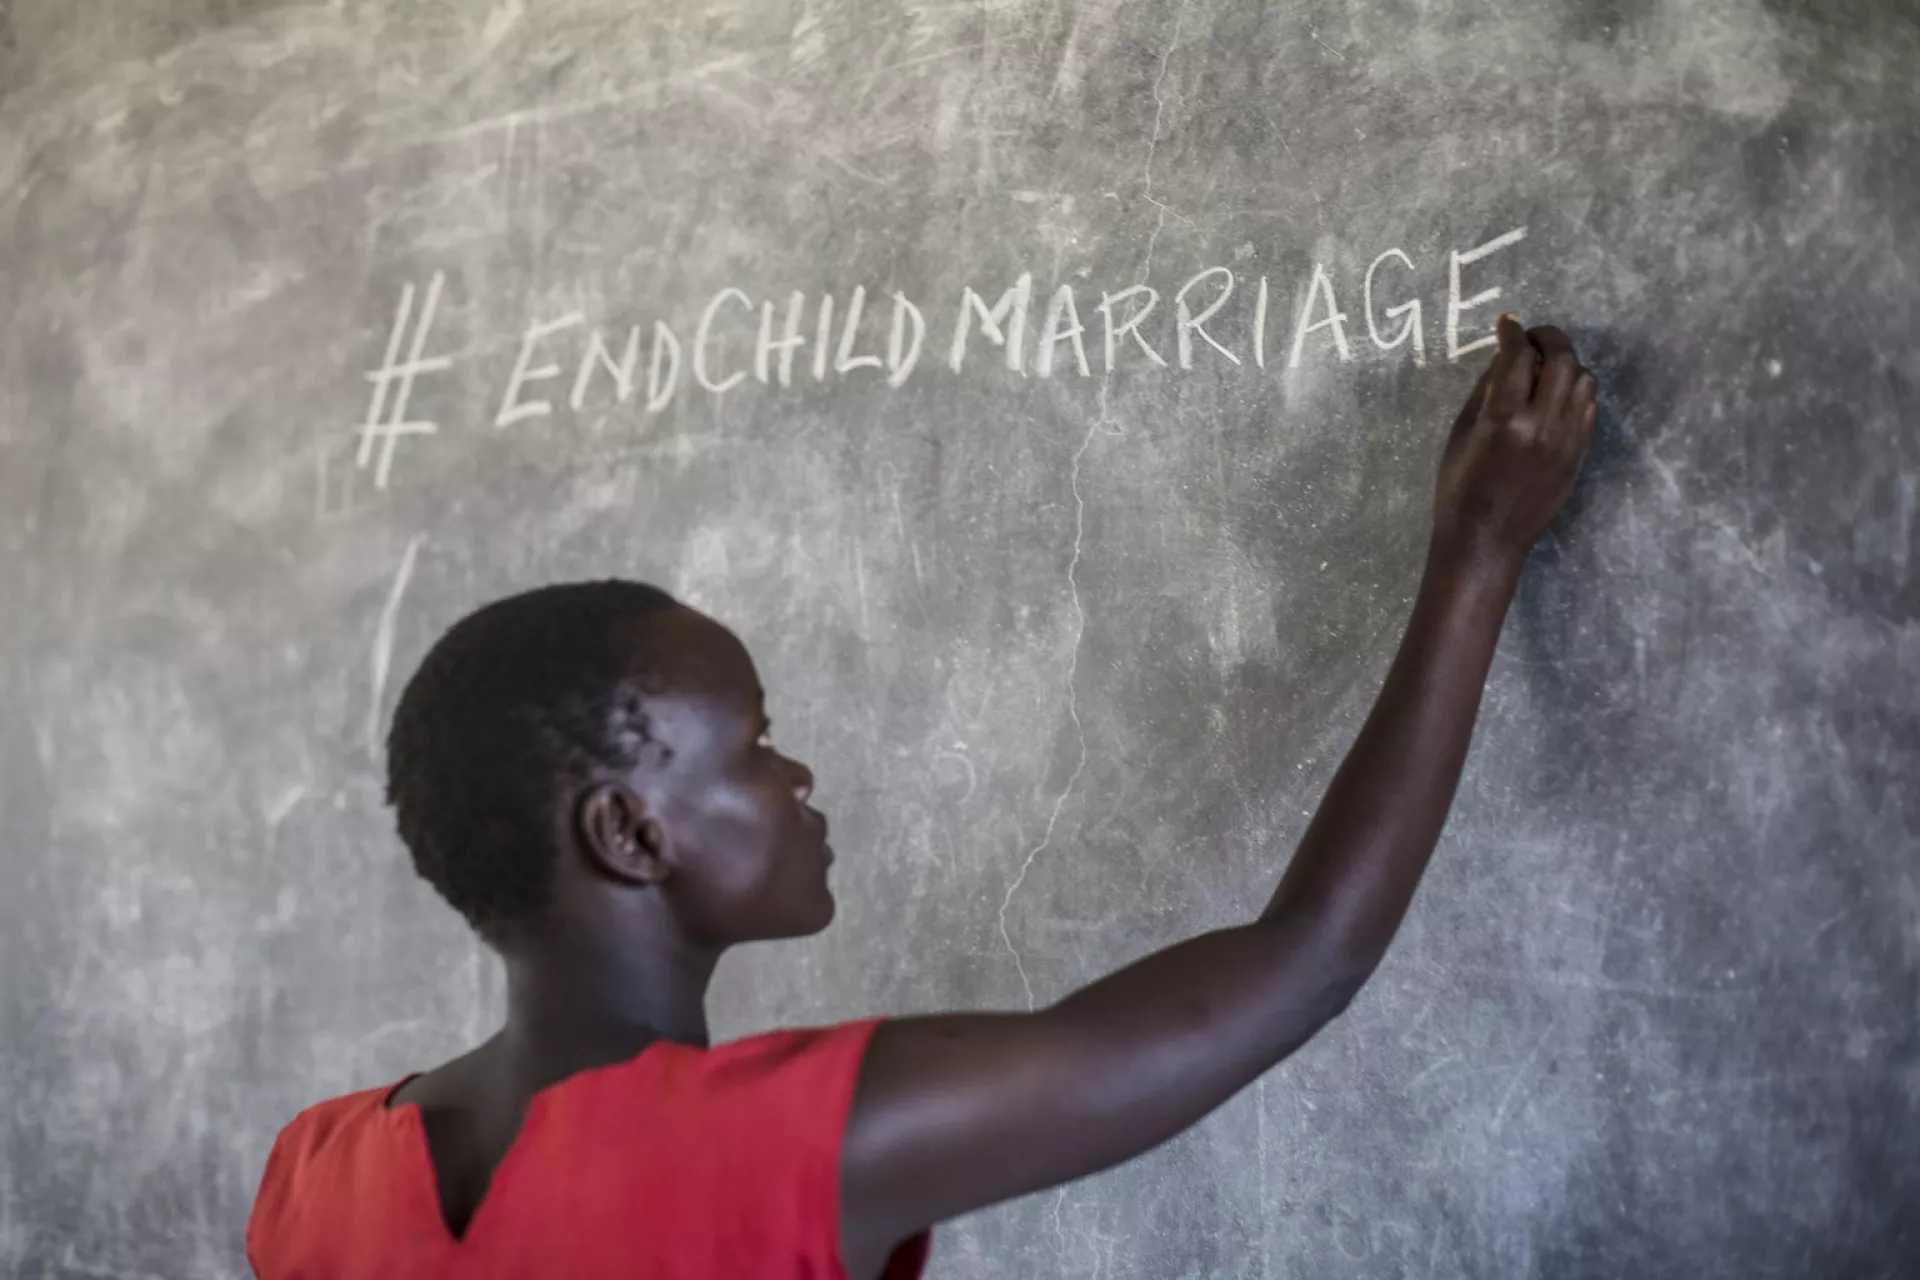 child marriage, violence against children, Uganda